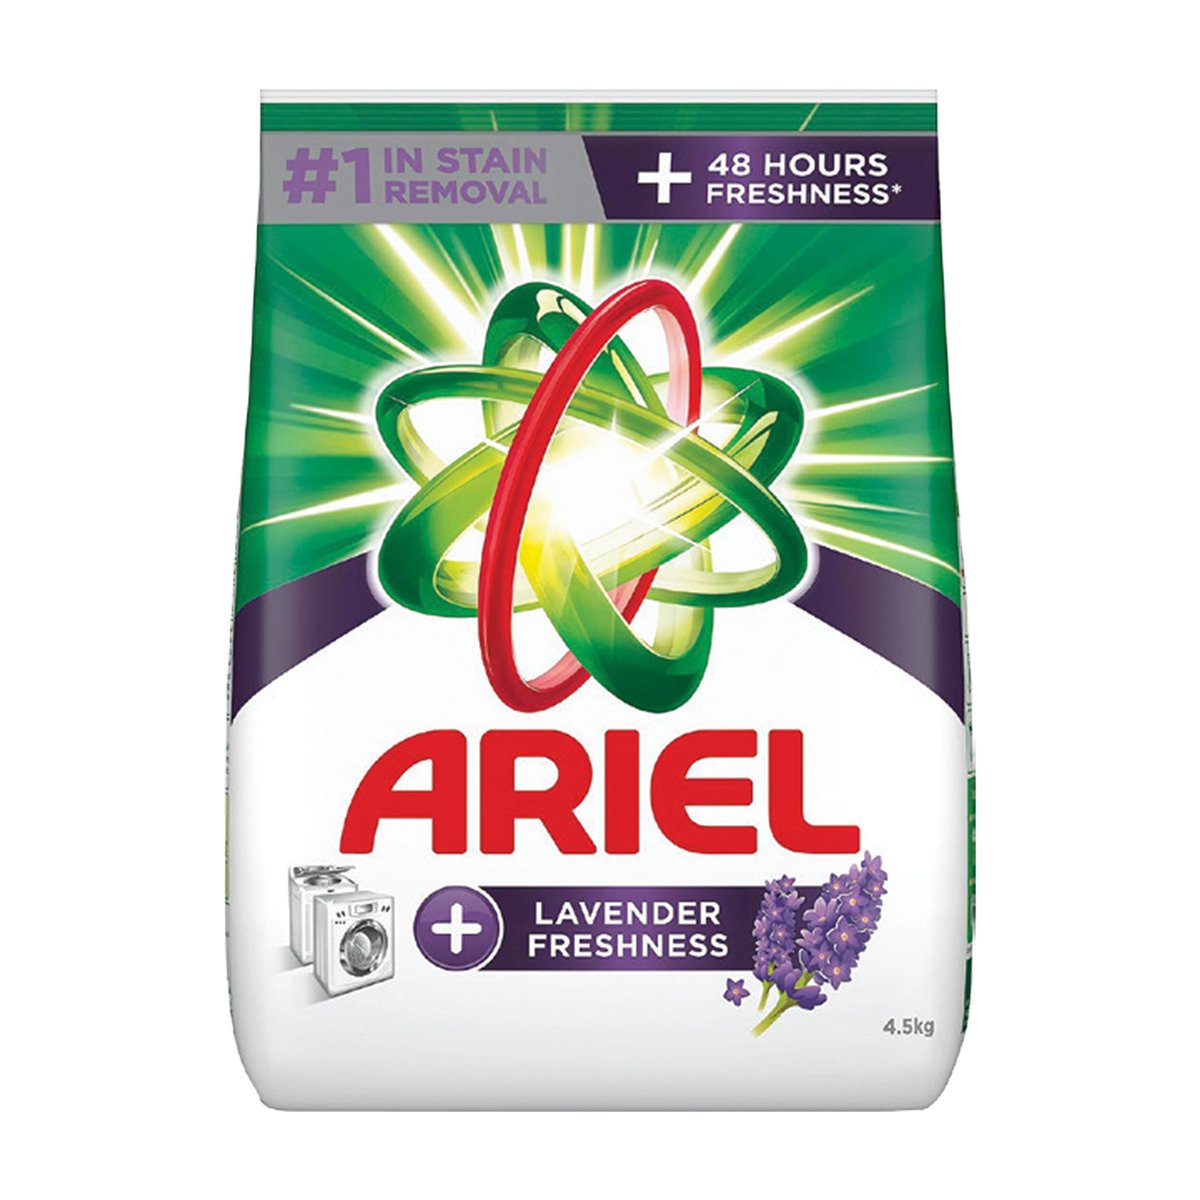 Ariel Lavender Freshness Washing Powder Value Pack 4.5 kg